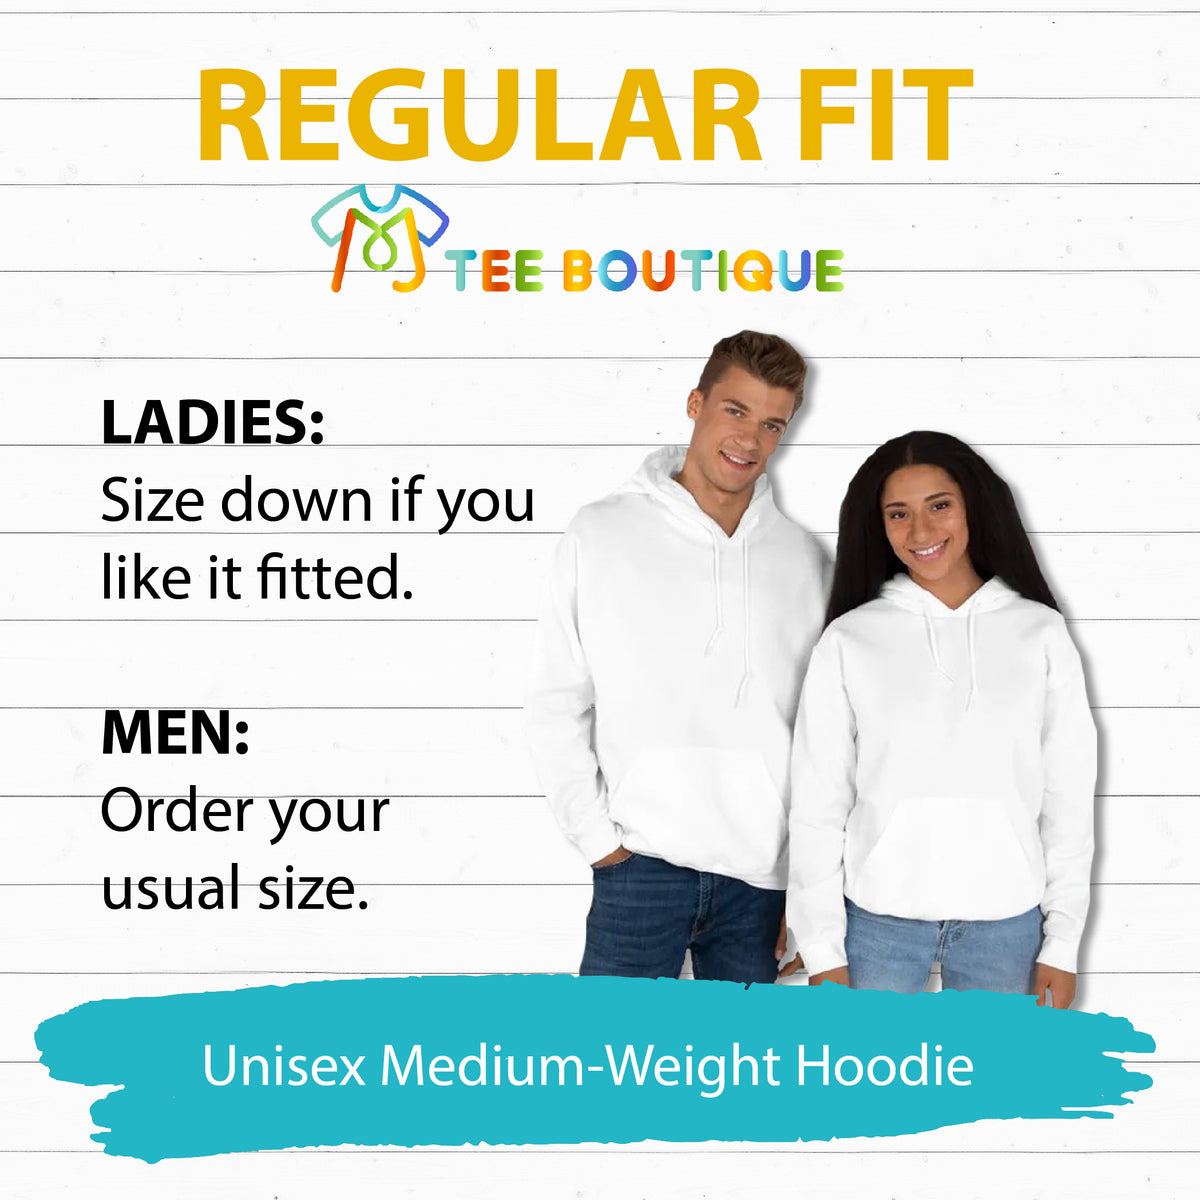 You Are Enough Girl Power Psychology Shirt | Psychologist Gift | Unisex Hooded Sweatshirt